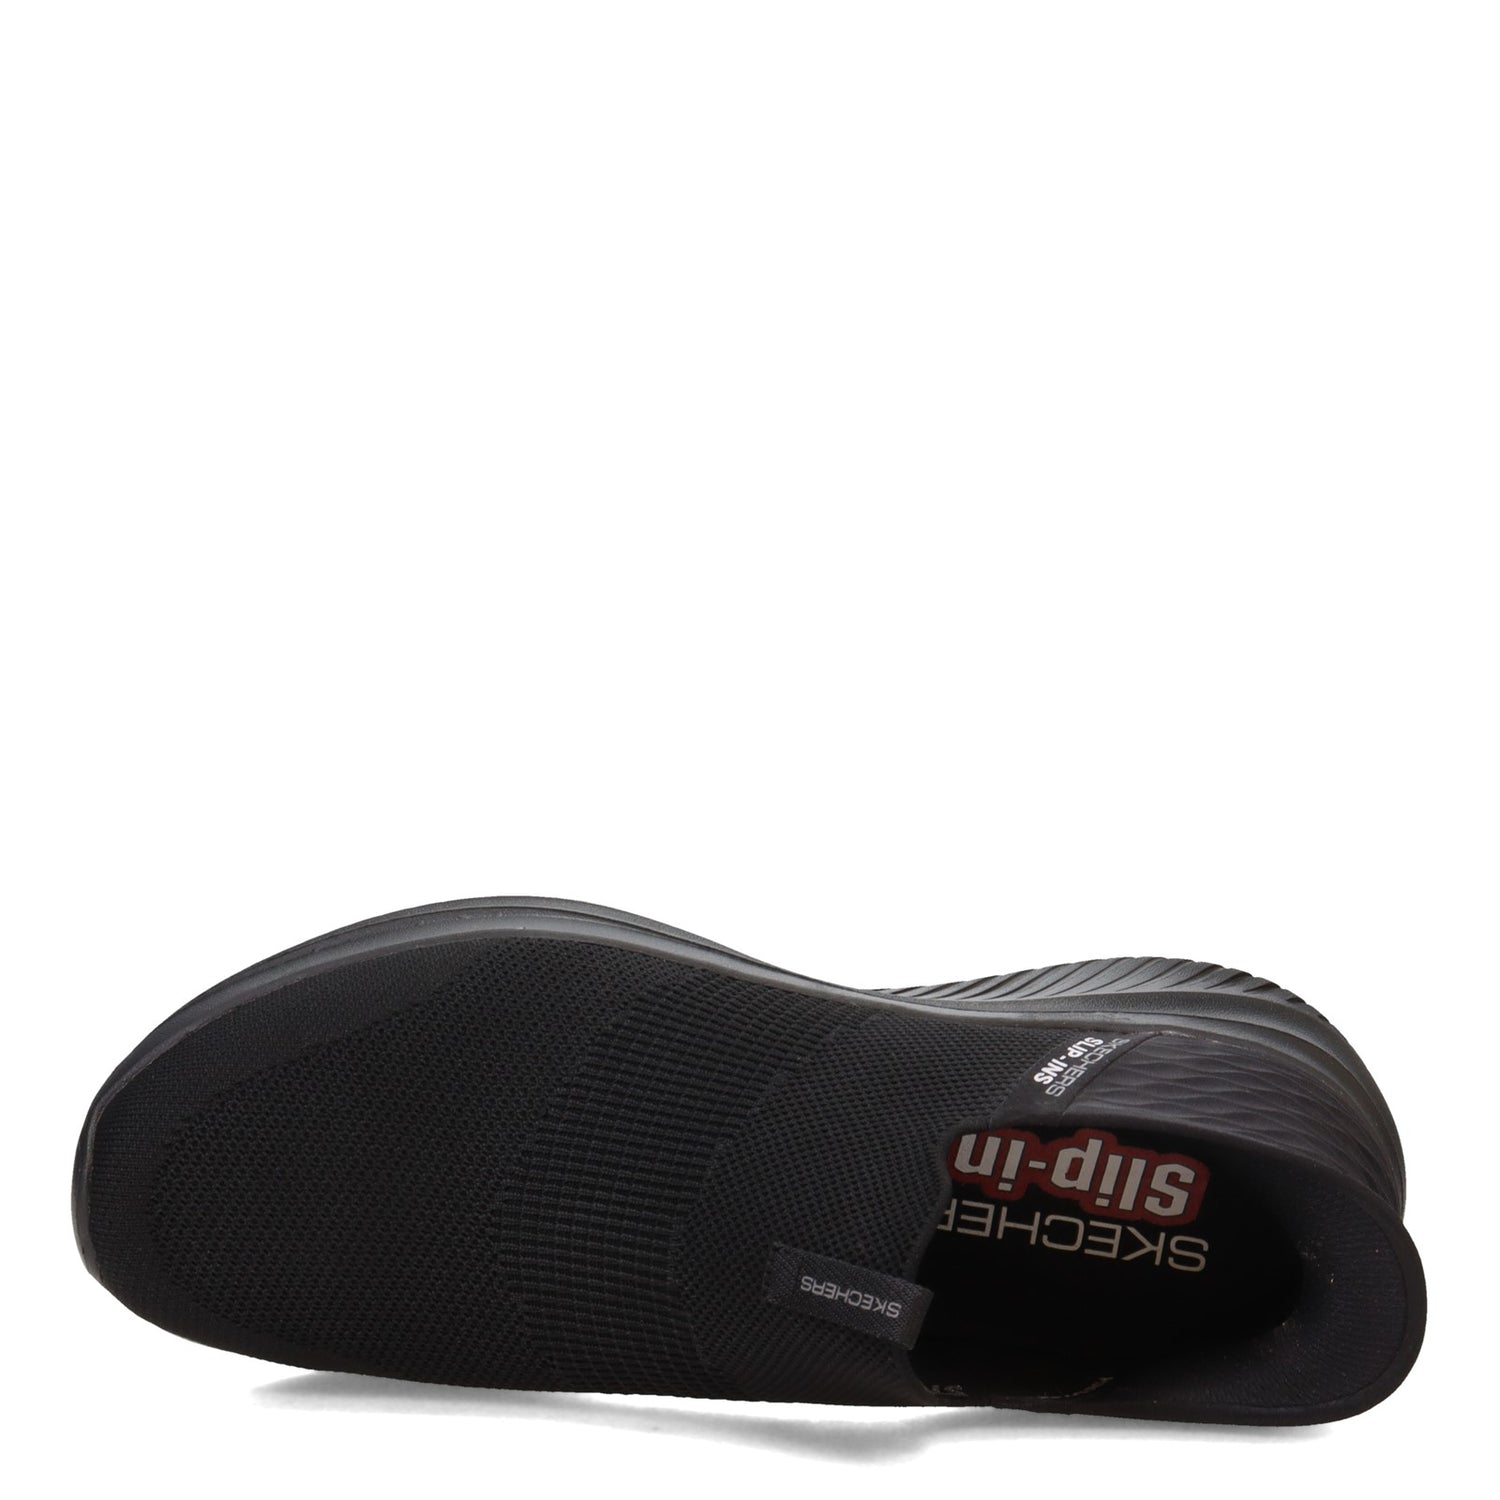 Skechers Slip-Ins Ultra Flex 3.0 Men's Wide-Width Running Shoe Grey